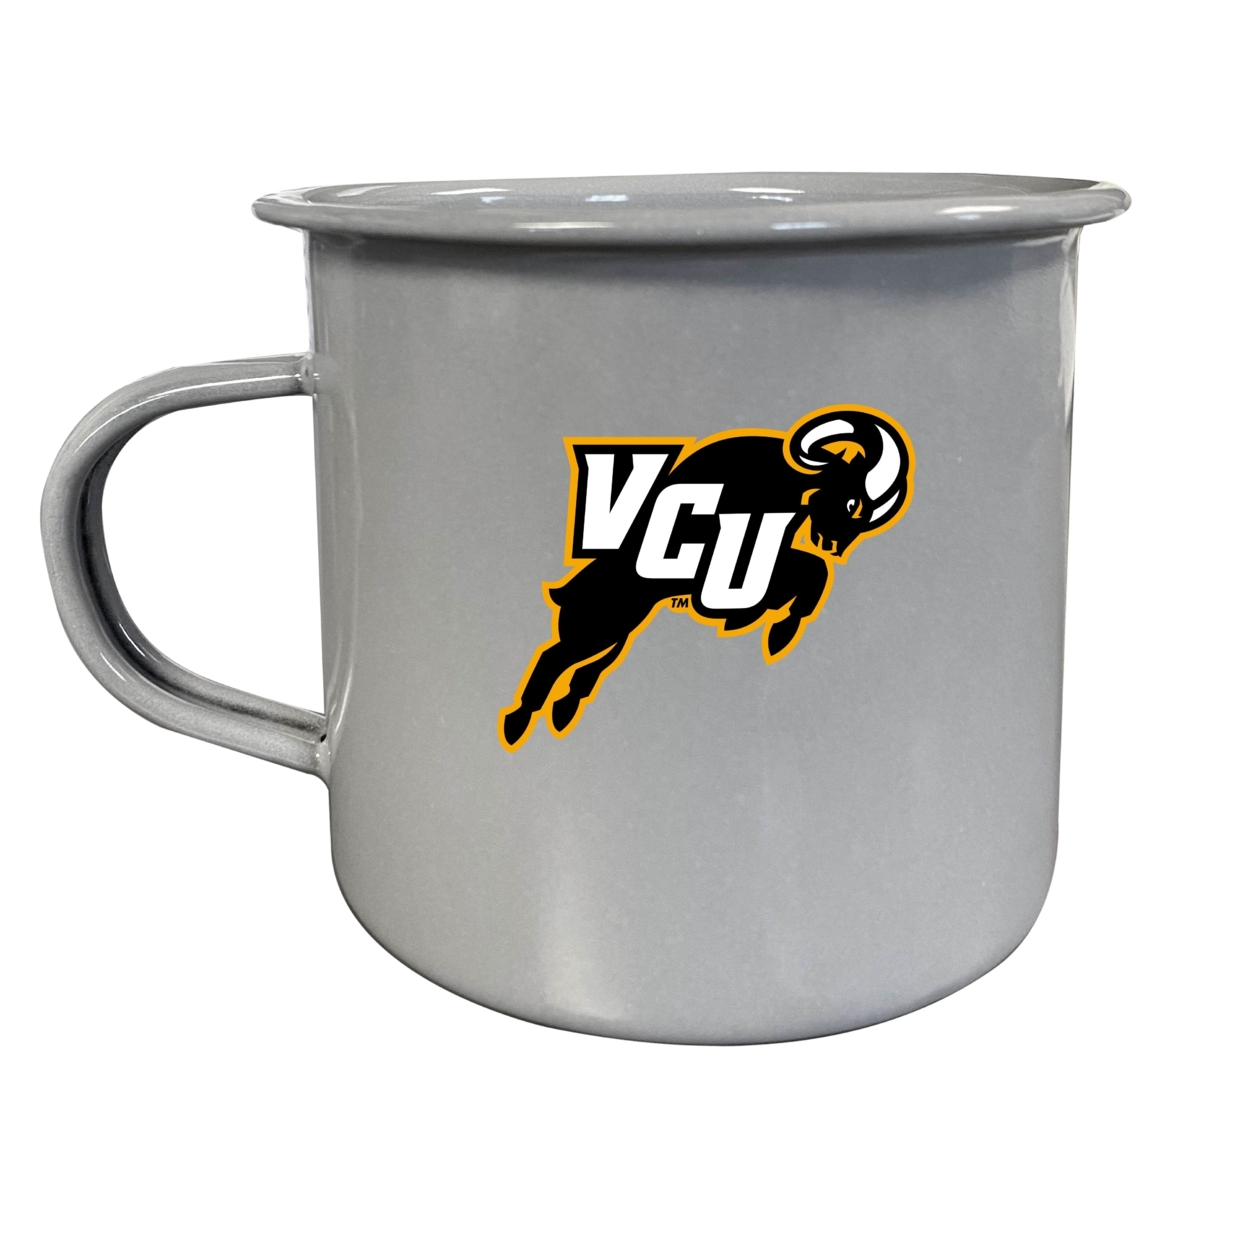 Virginia Commonwealth Tin Camper Coffee Mug - Choose Your Color - Gray